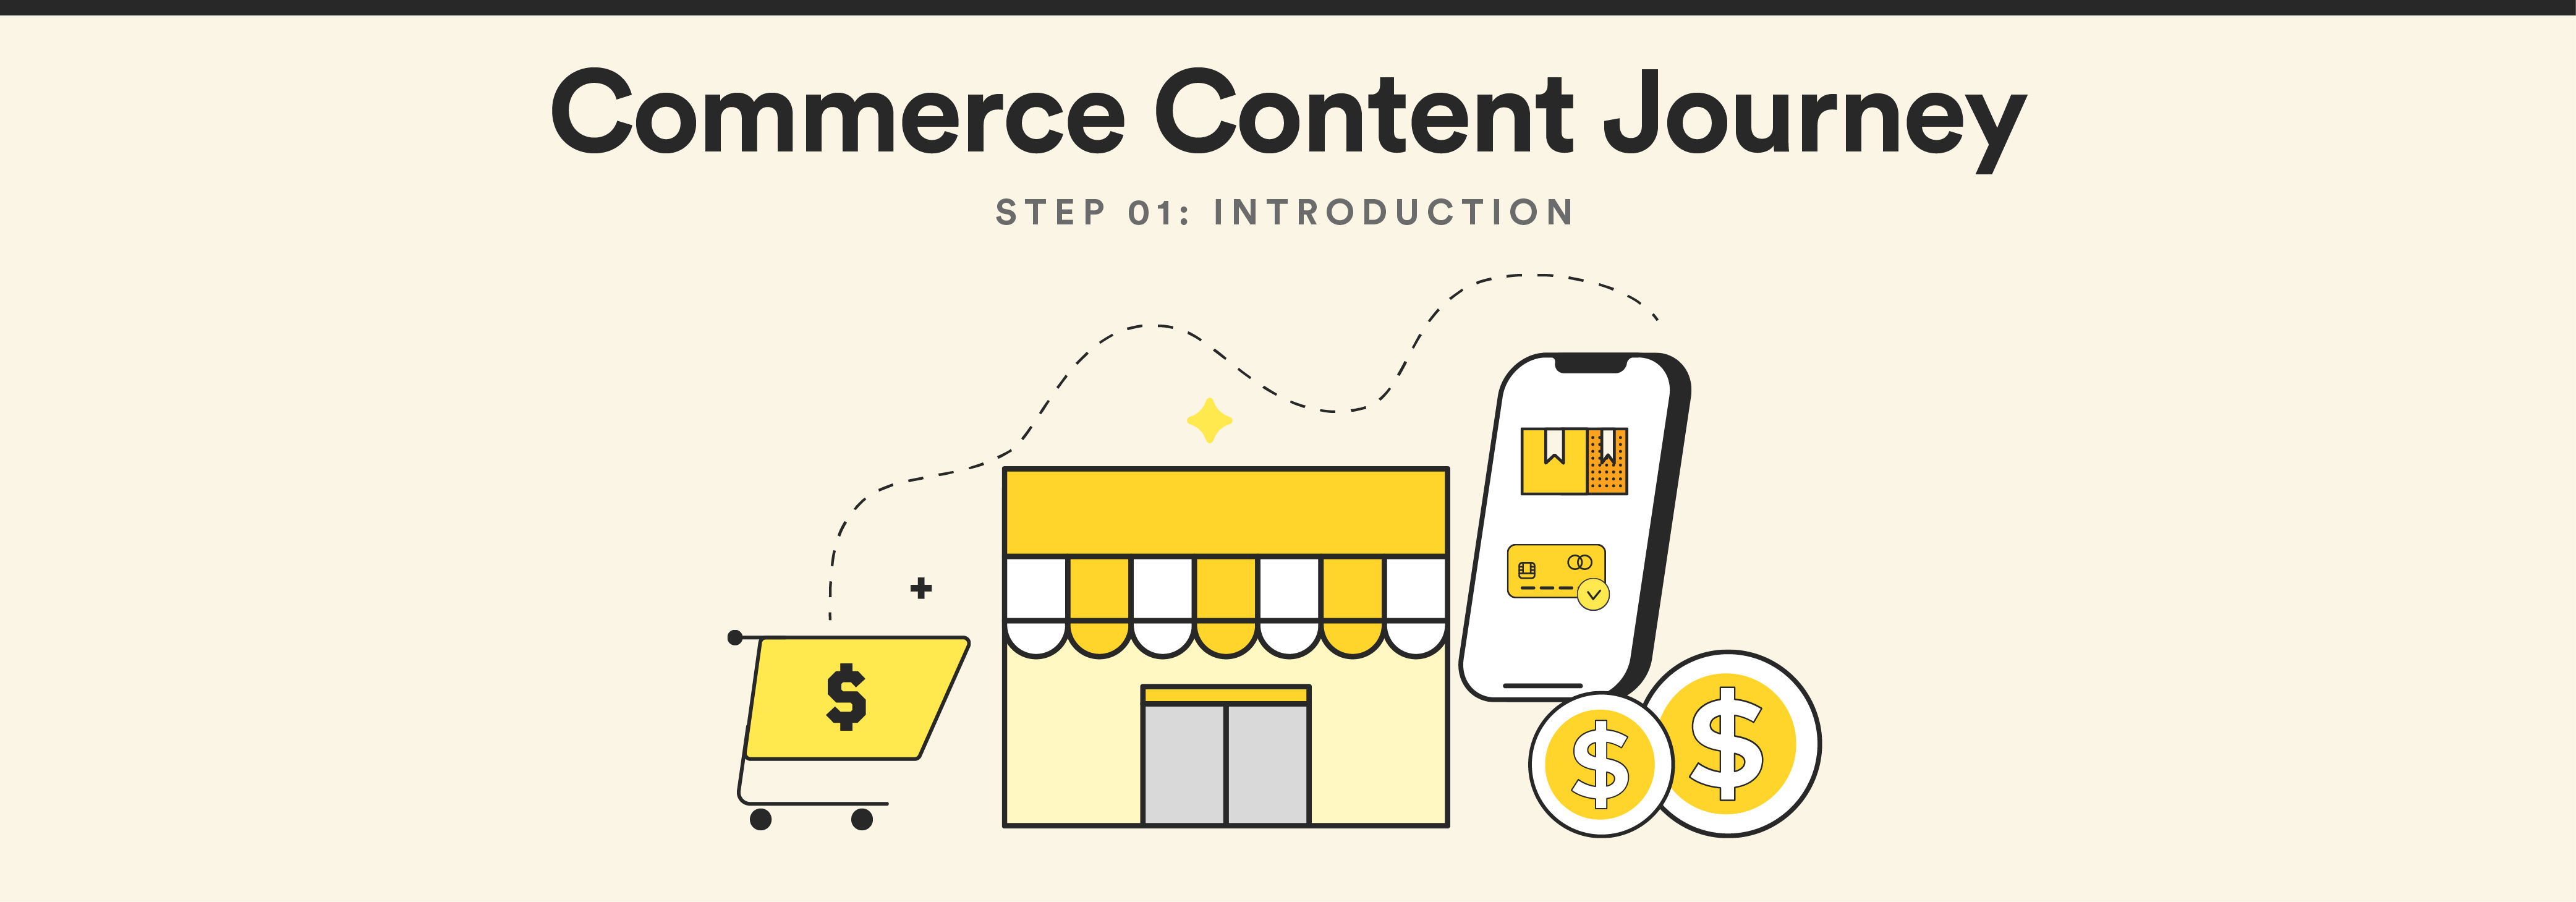 Commerce Content Journey: Introduction